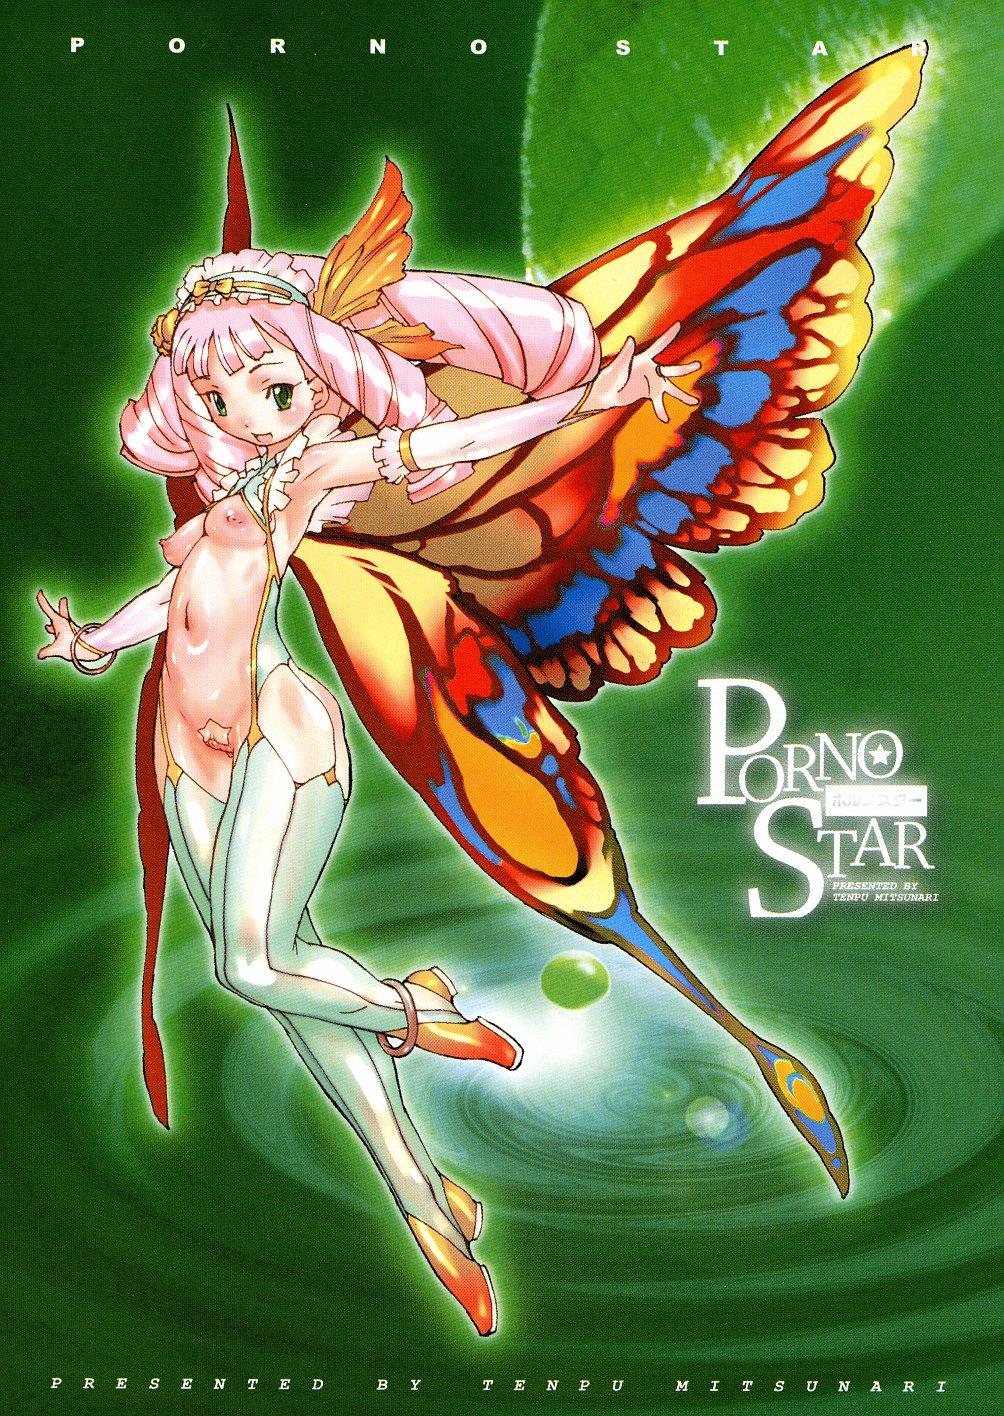 [Tenpuu Mitsunari] PORNO STAR Pretty Soldier Labia-n-Rose c01 [english] 5